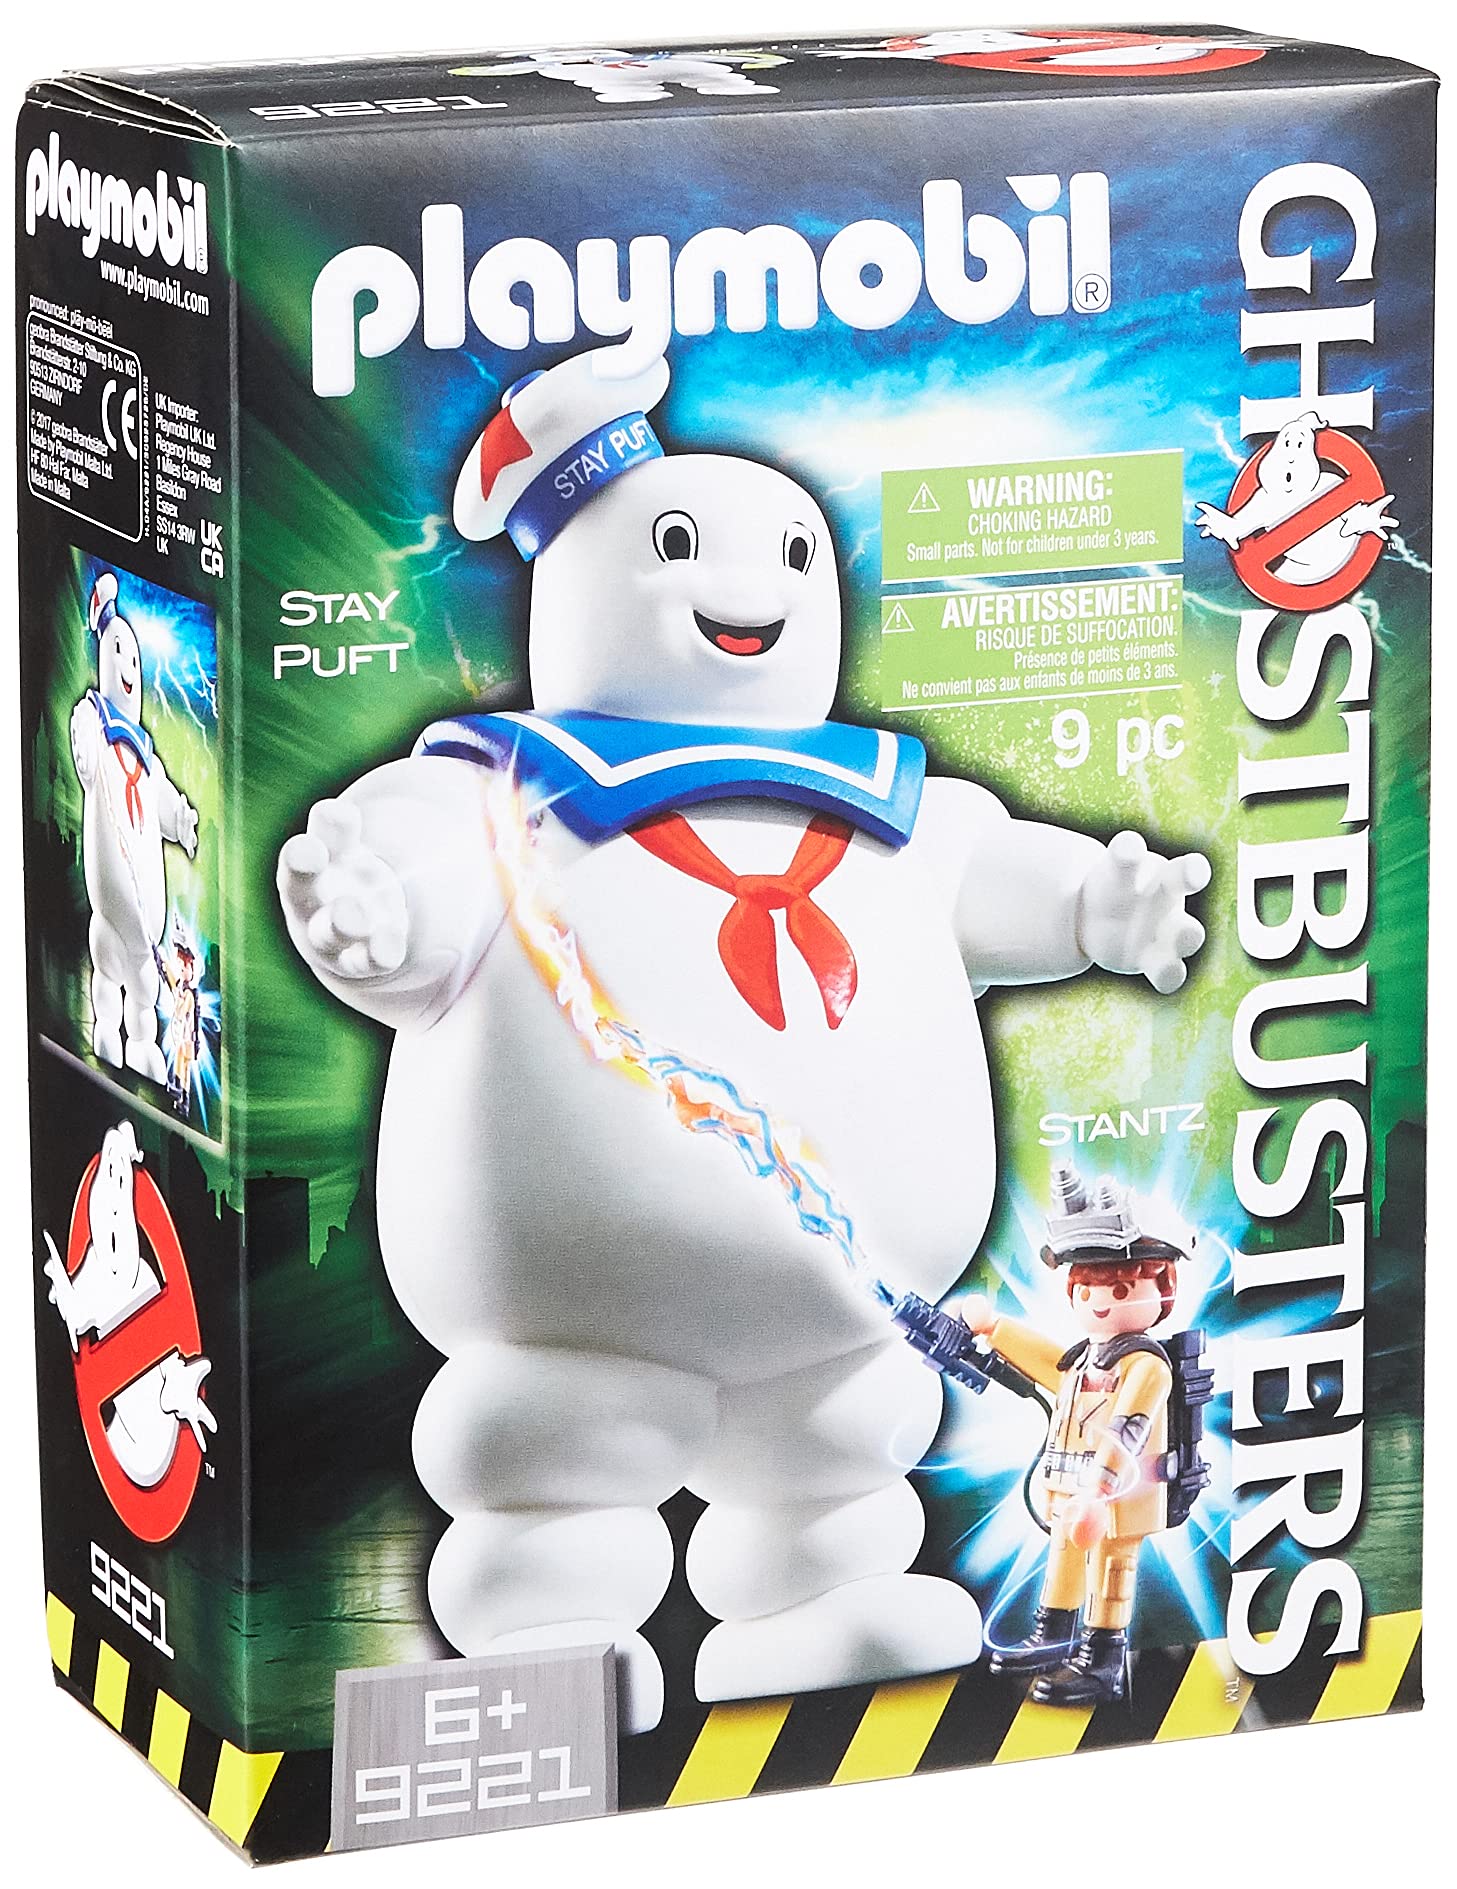 PLAYMOBIL Stay Puft Marshmallow Man